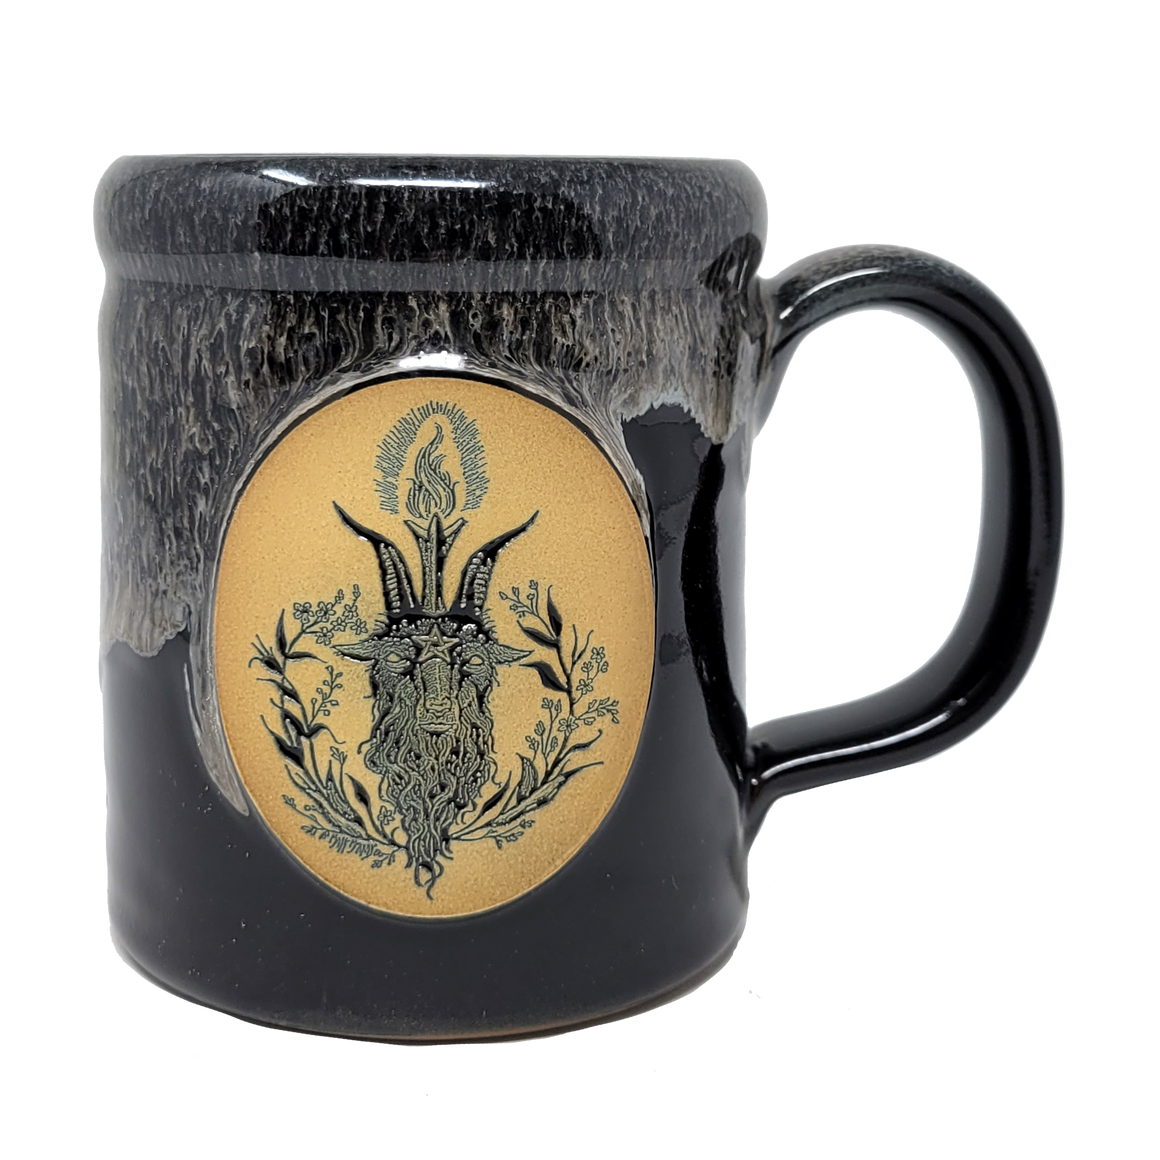 Baphomet Mug by Black Veil